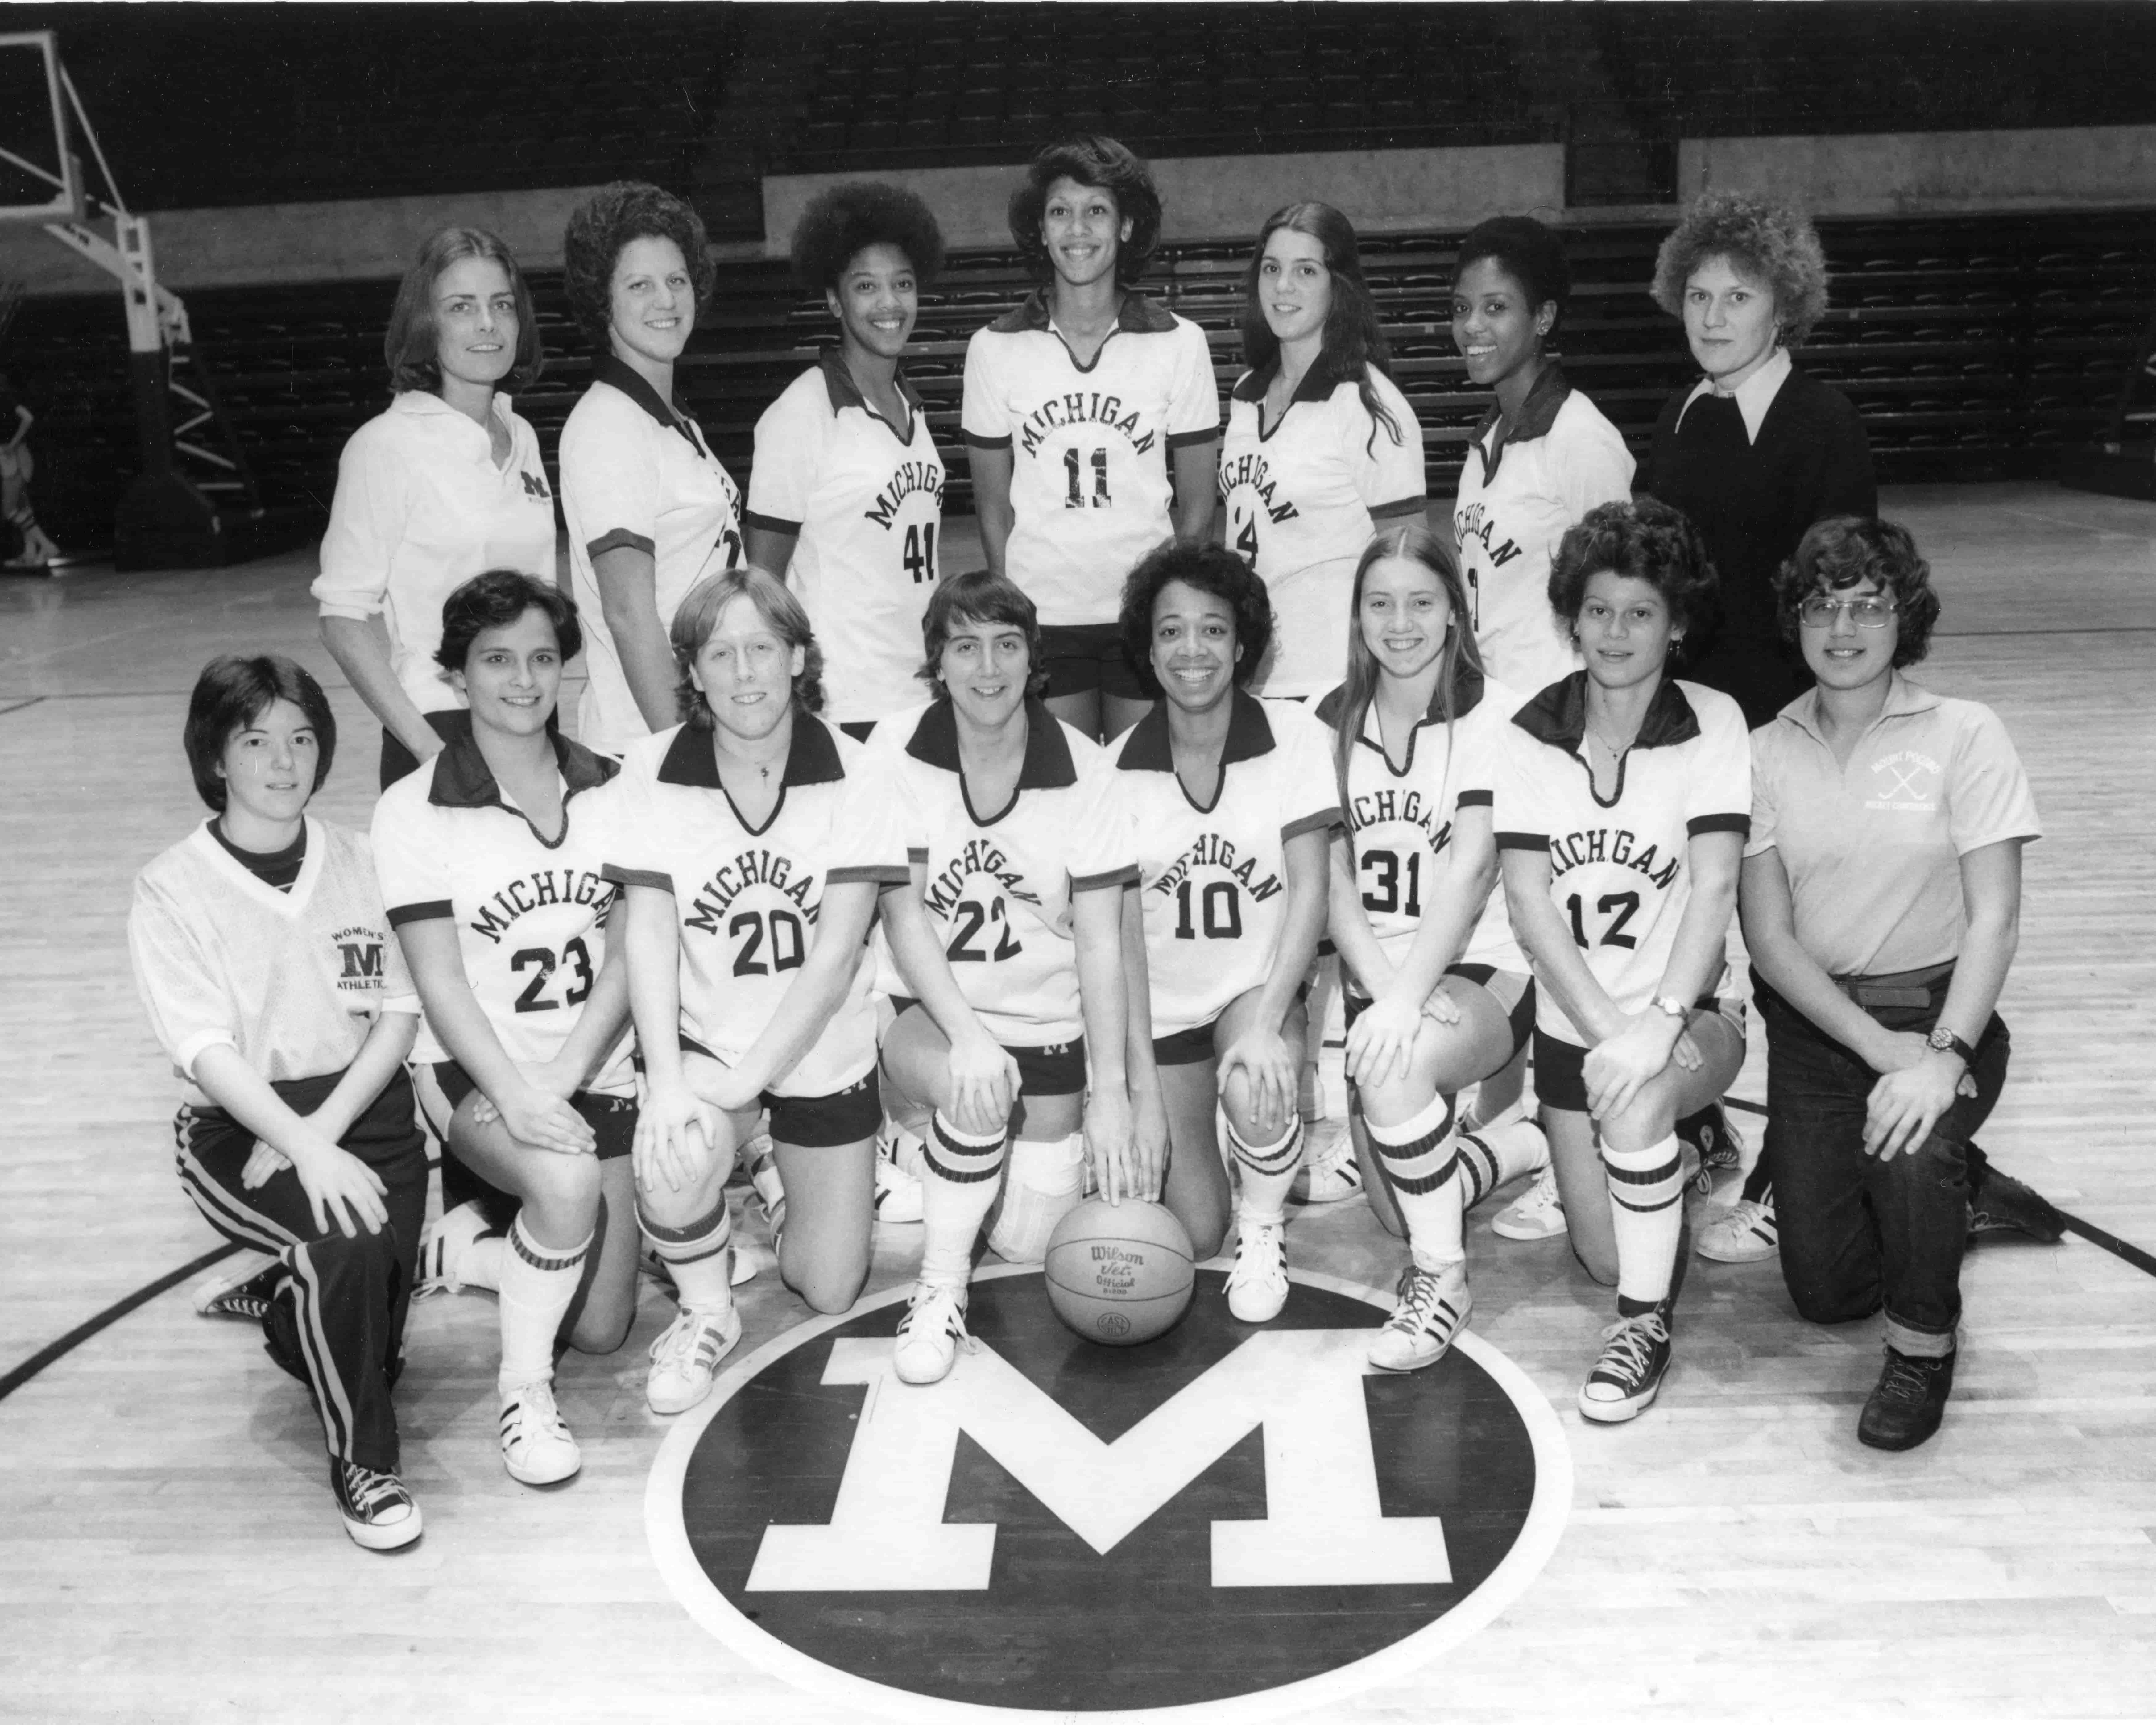 Carmel Borders with the women’s basketball team, 1976-77